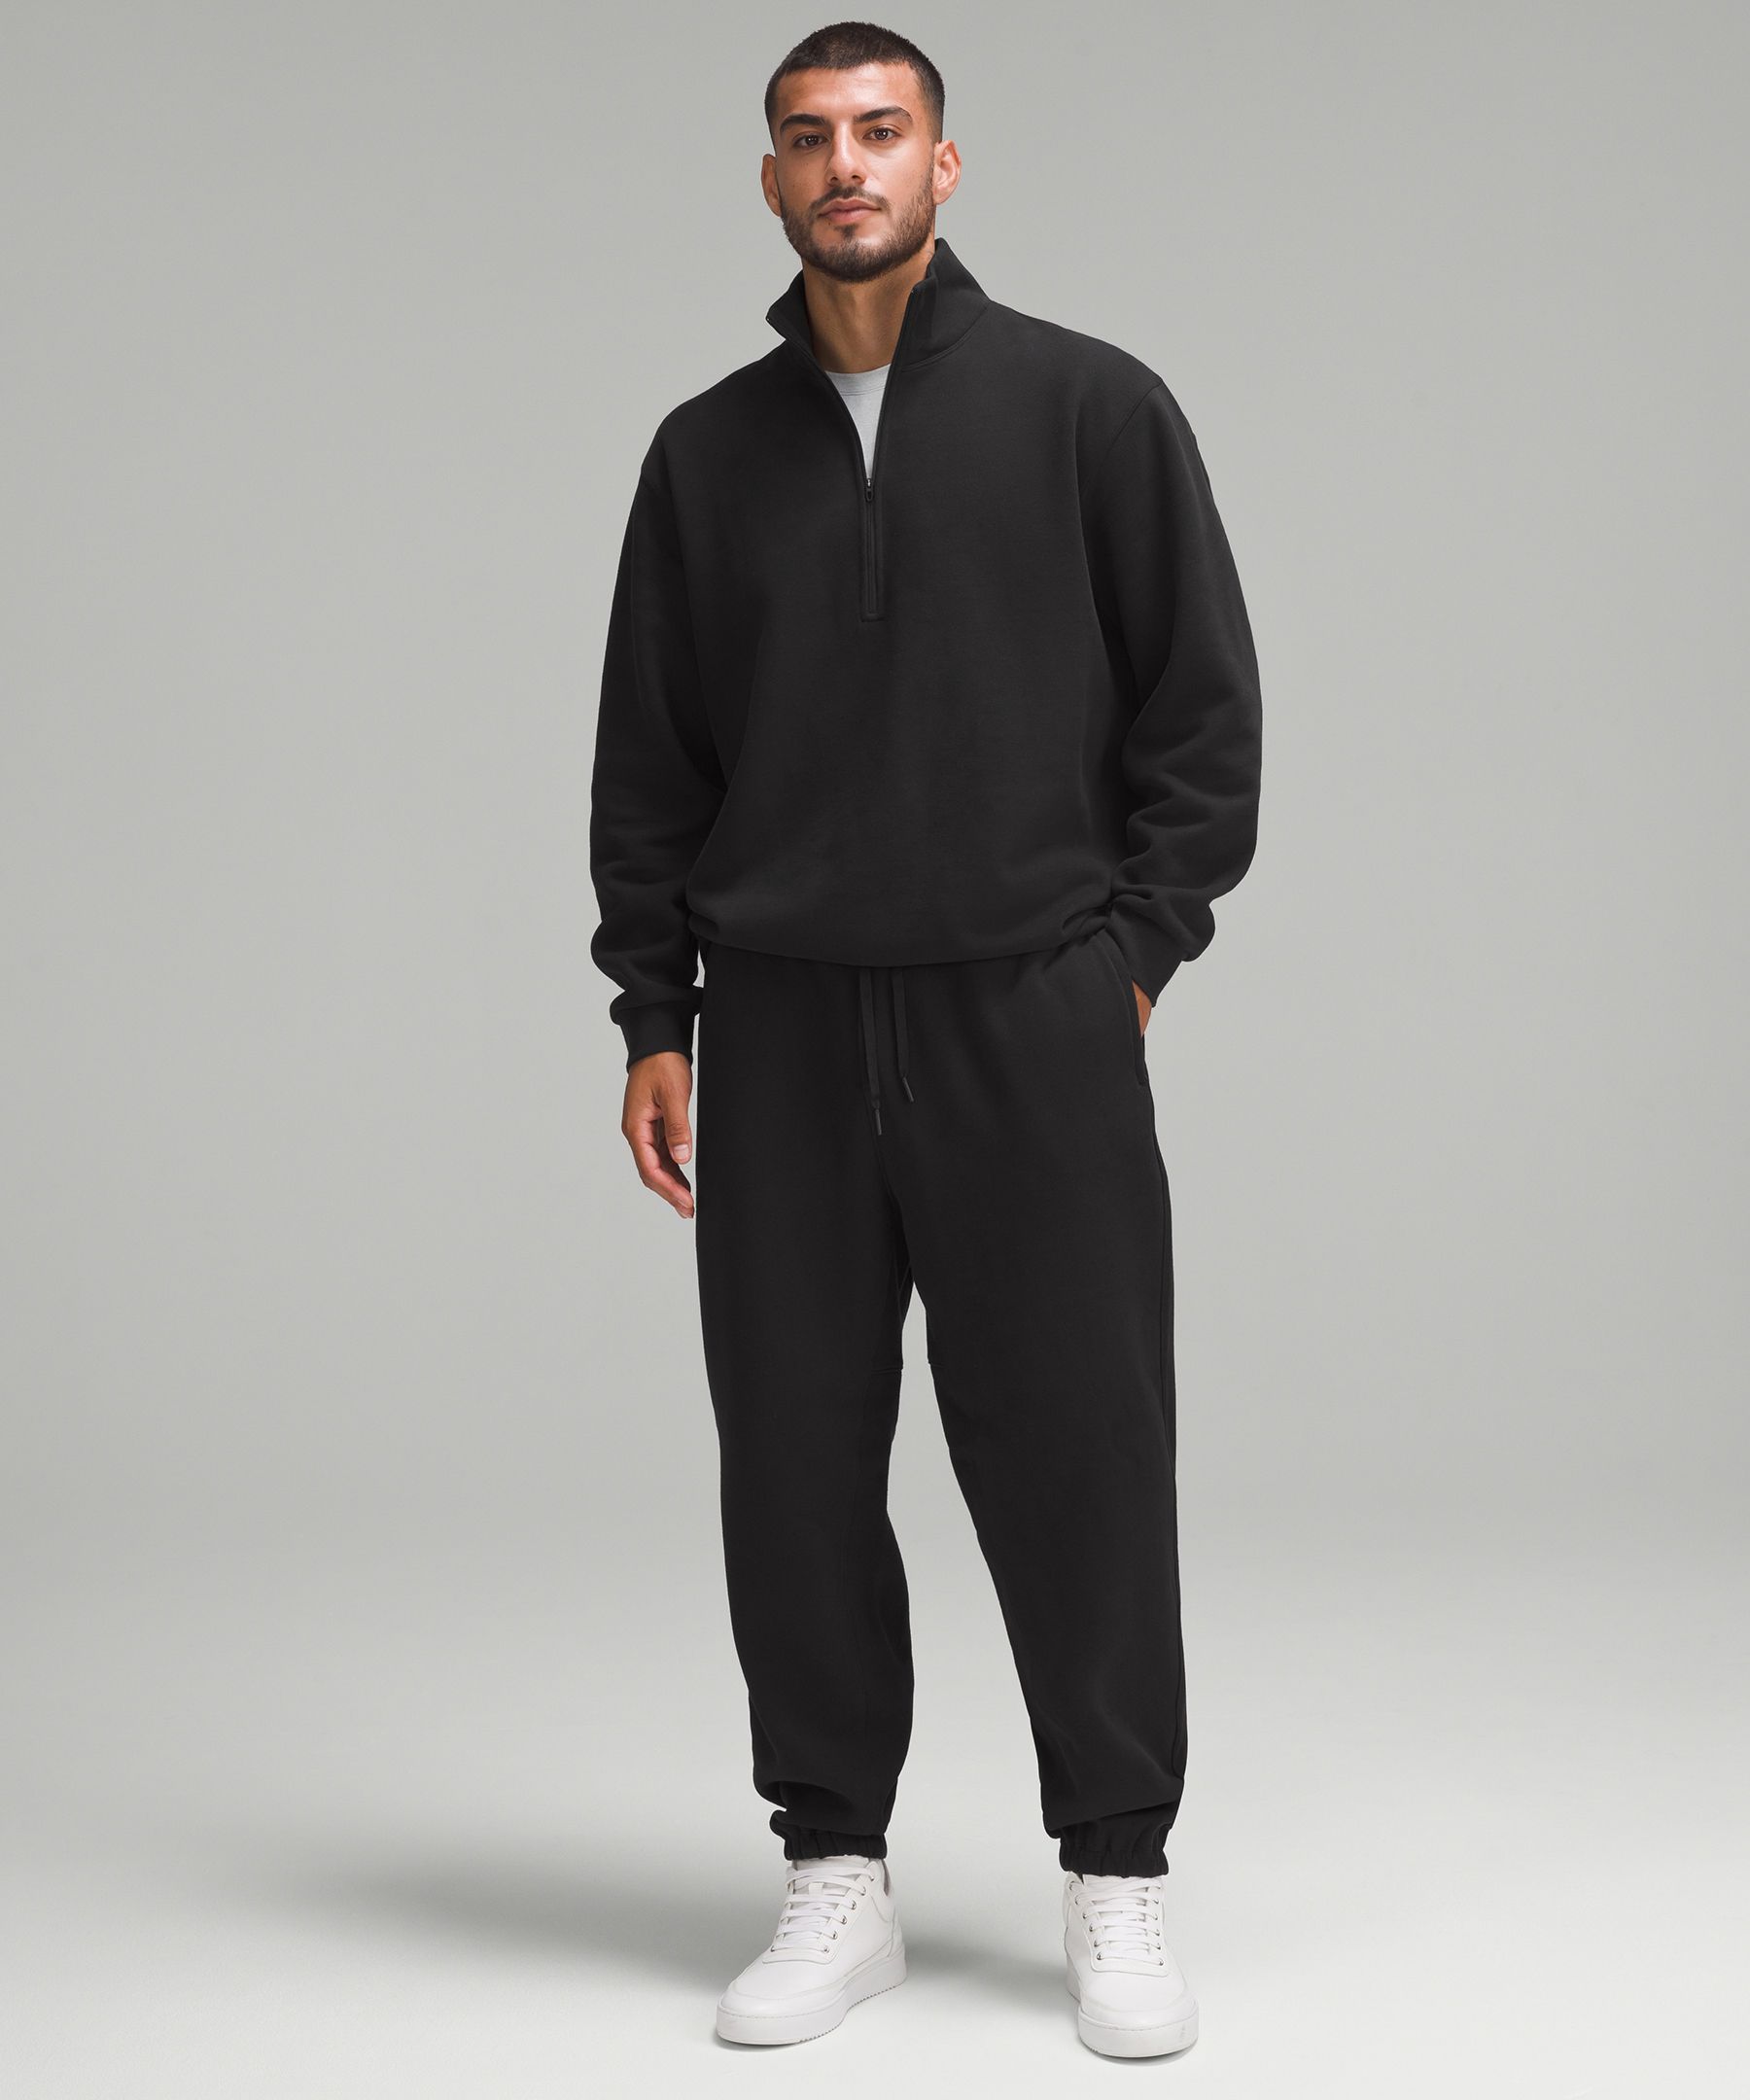 Relaxed Fit Sweatpants - Black - Men